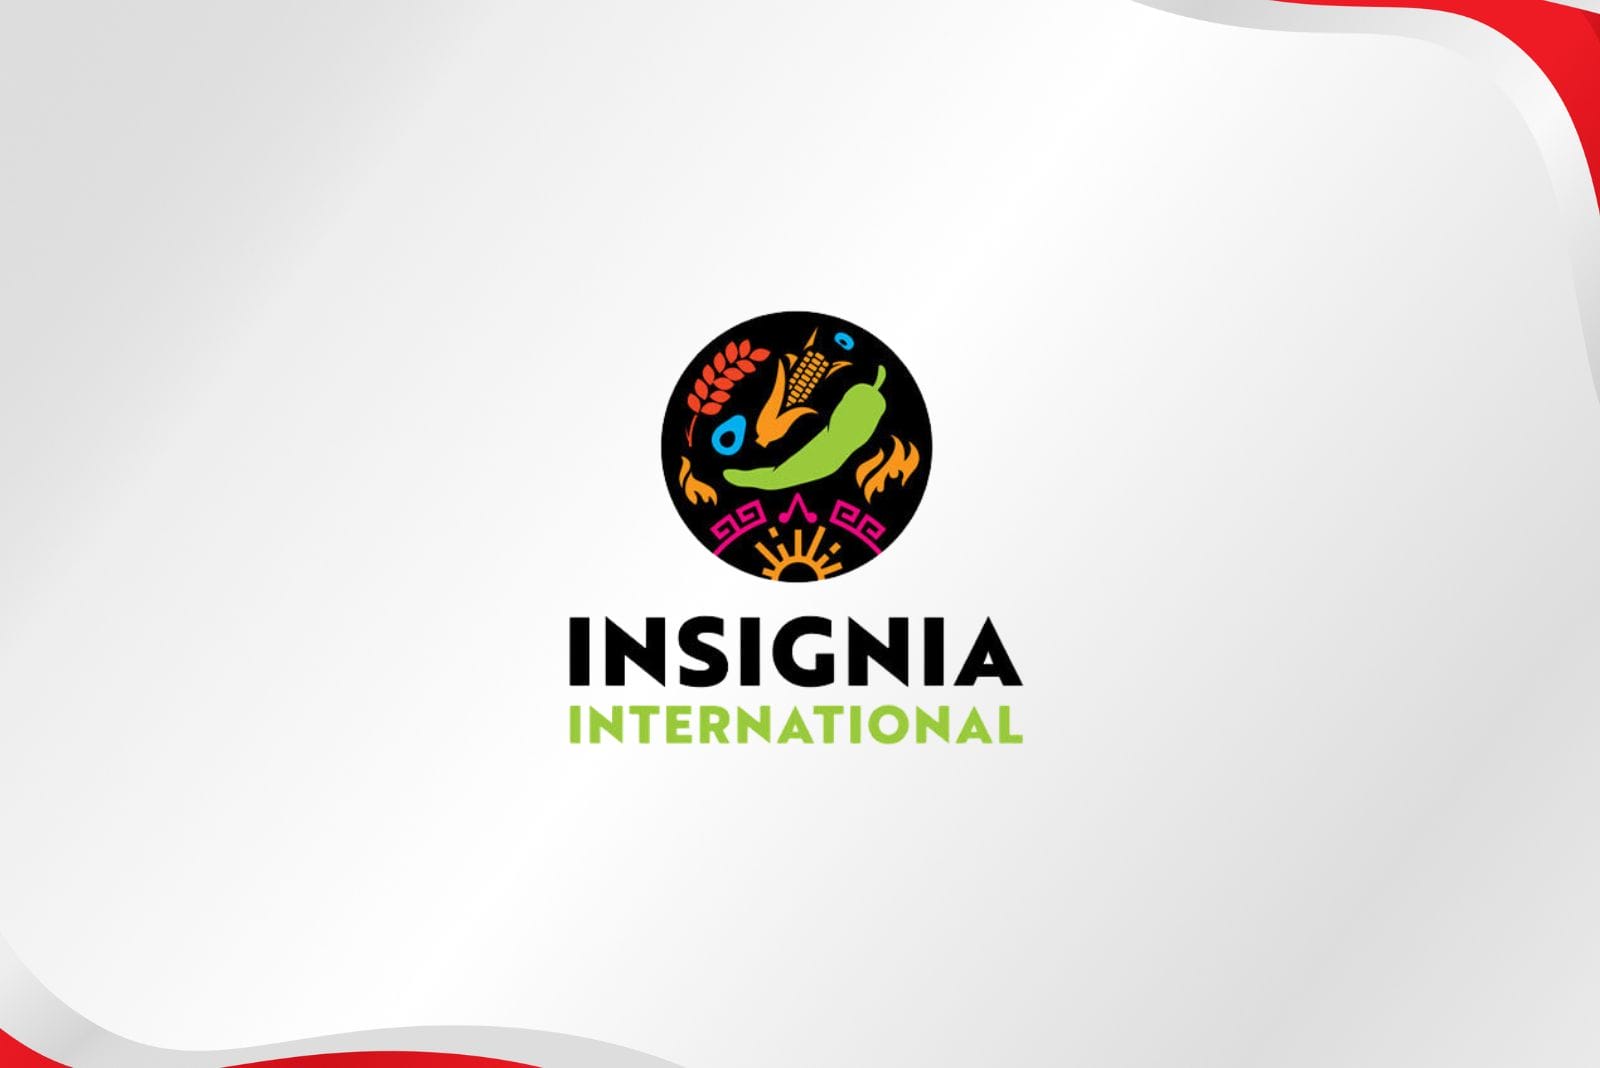 Insignia International company logo